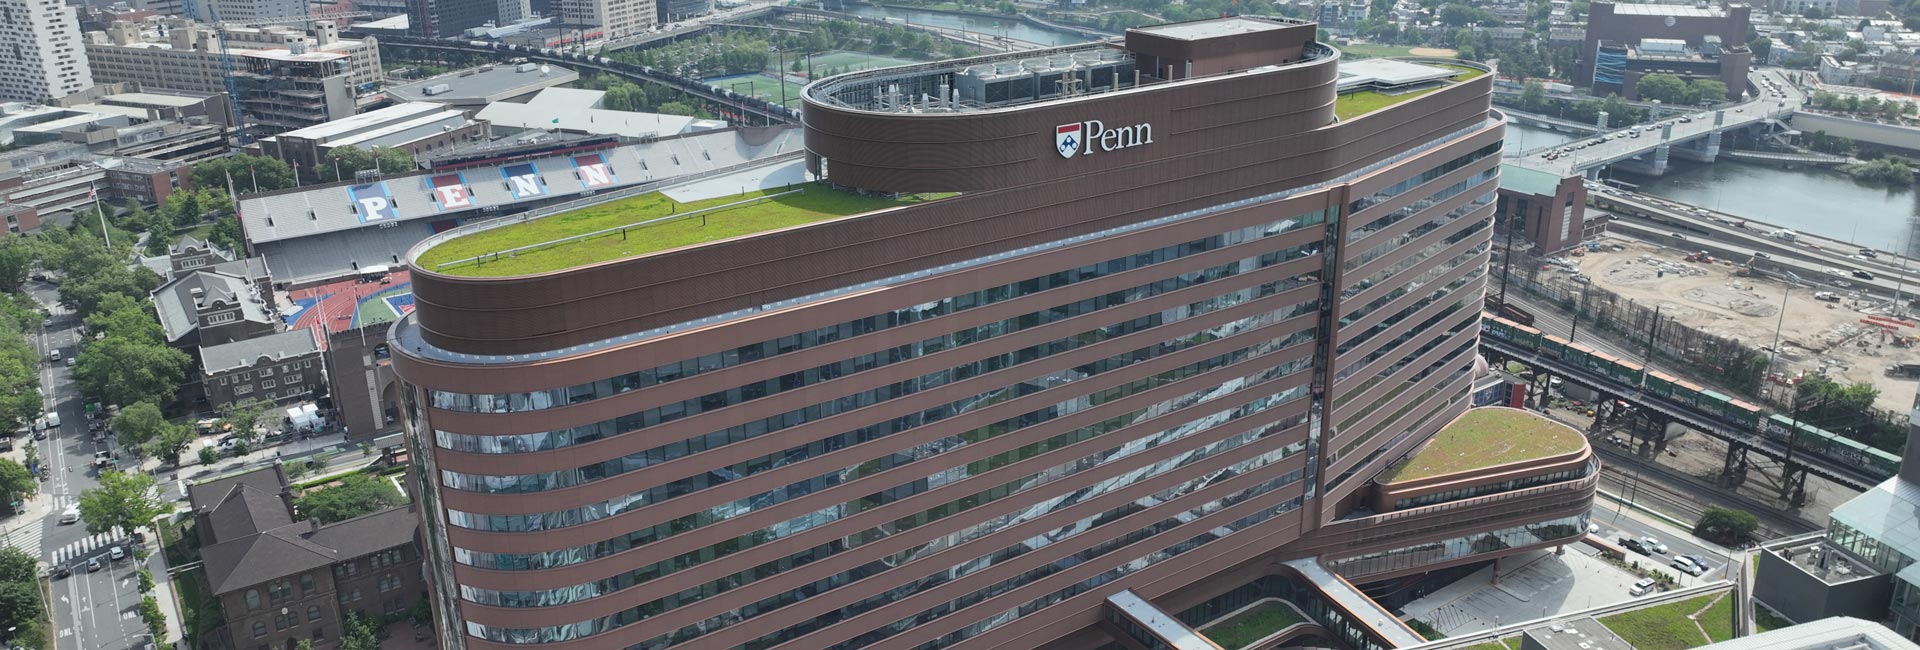 Penn Medicine Pavilion Drone exterior